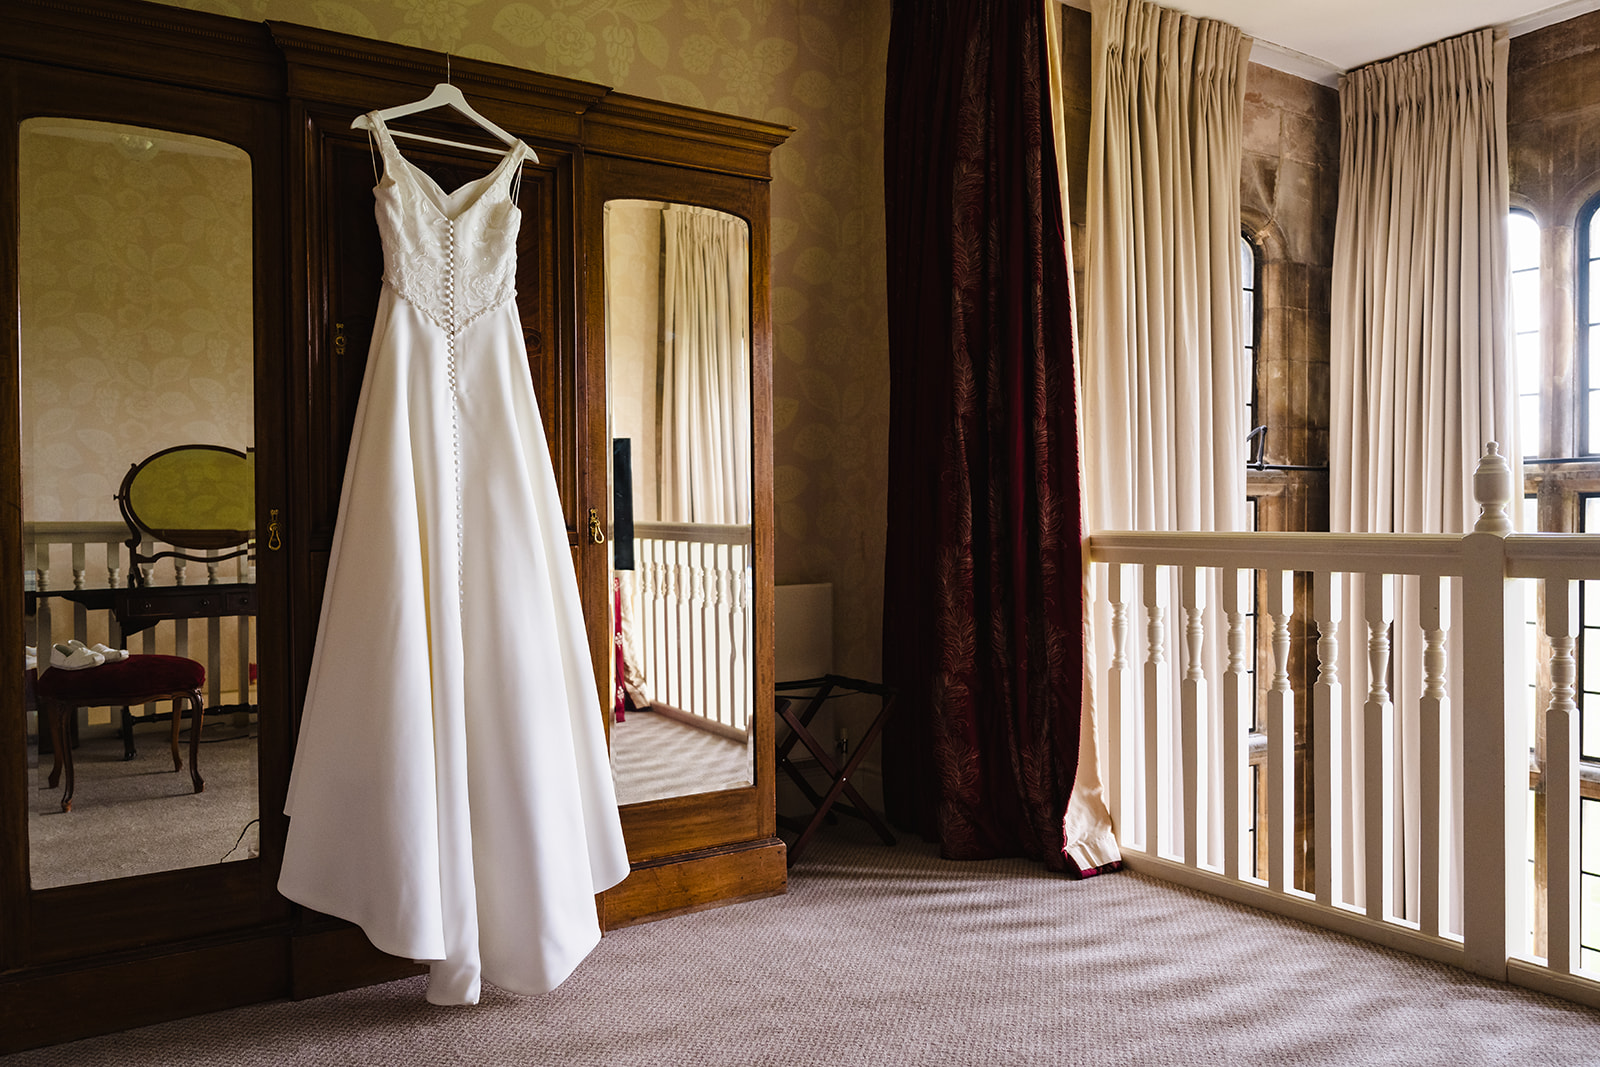 Stapleford park bridal prep room dress hanging on door by Amanda Forman Photography